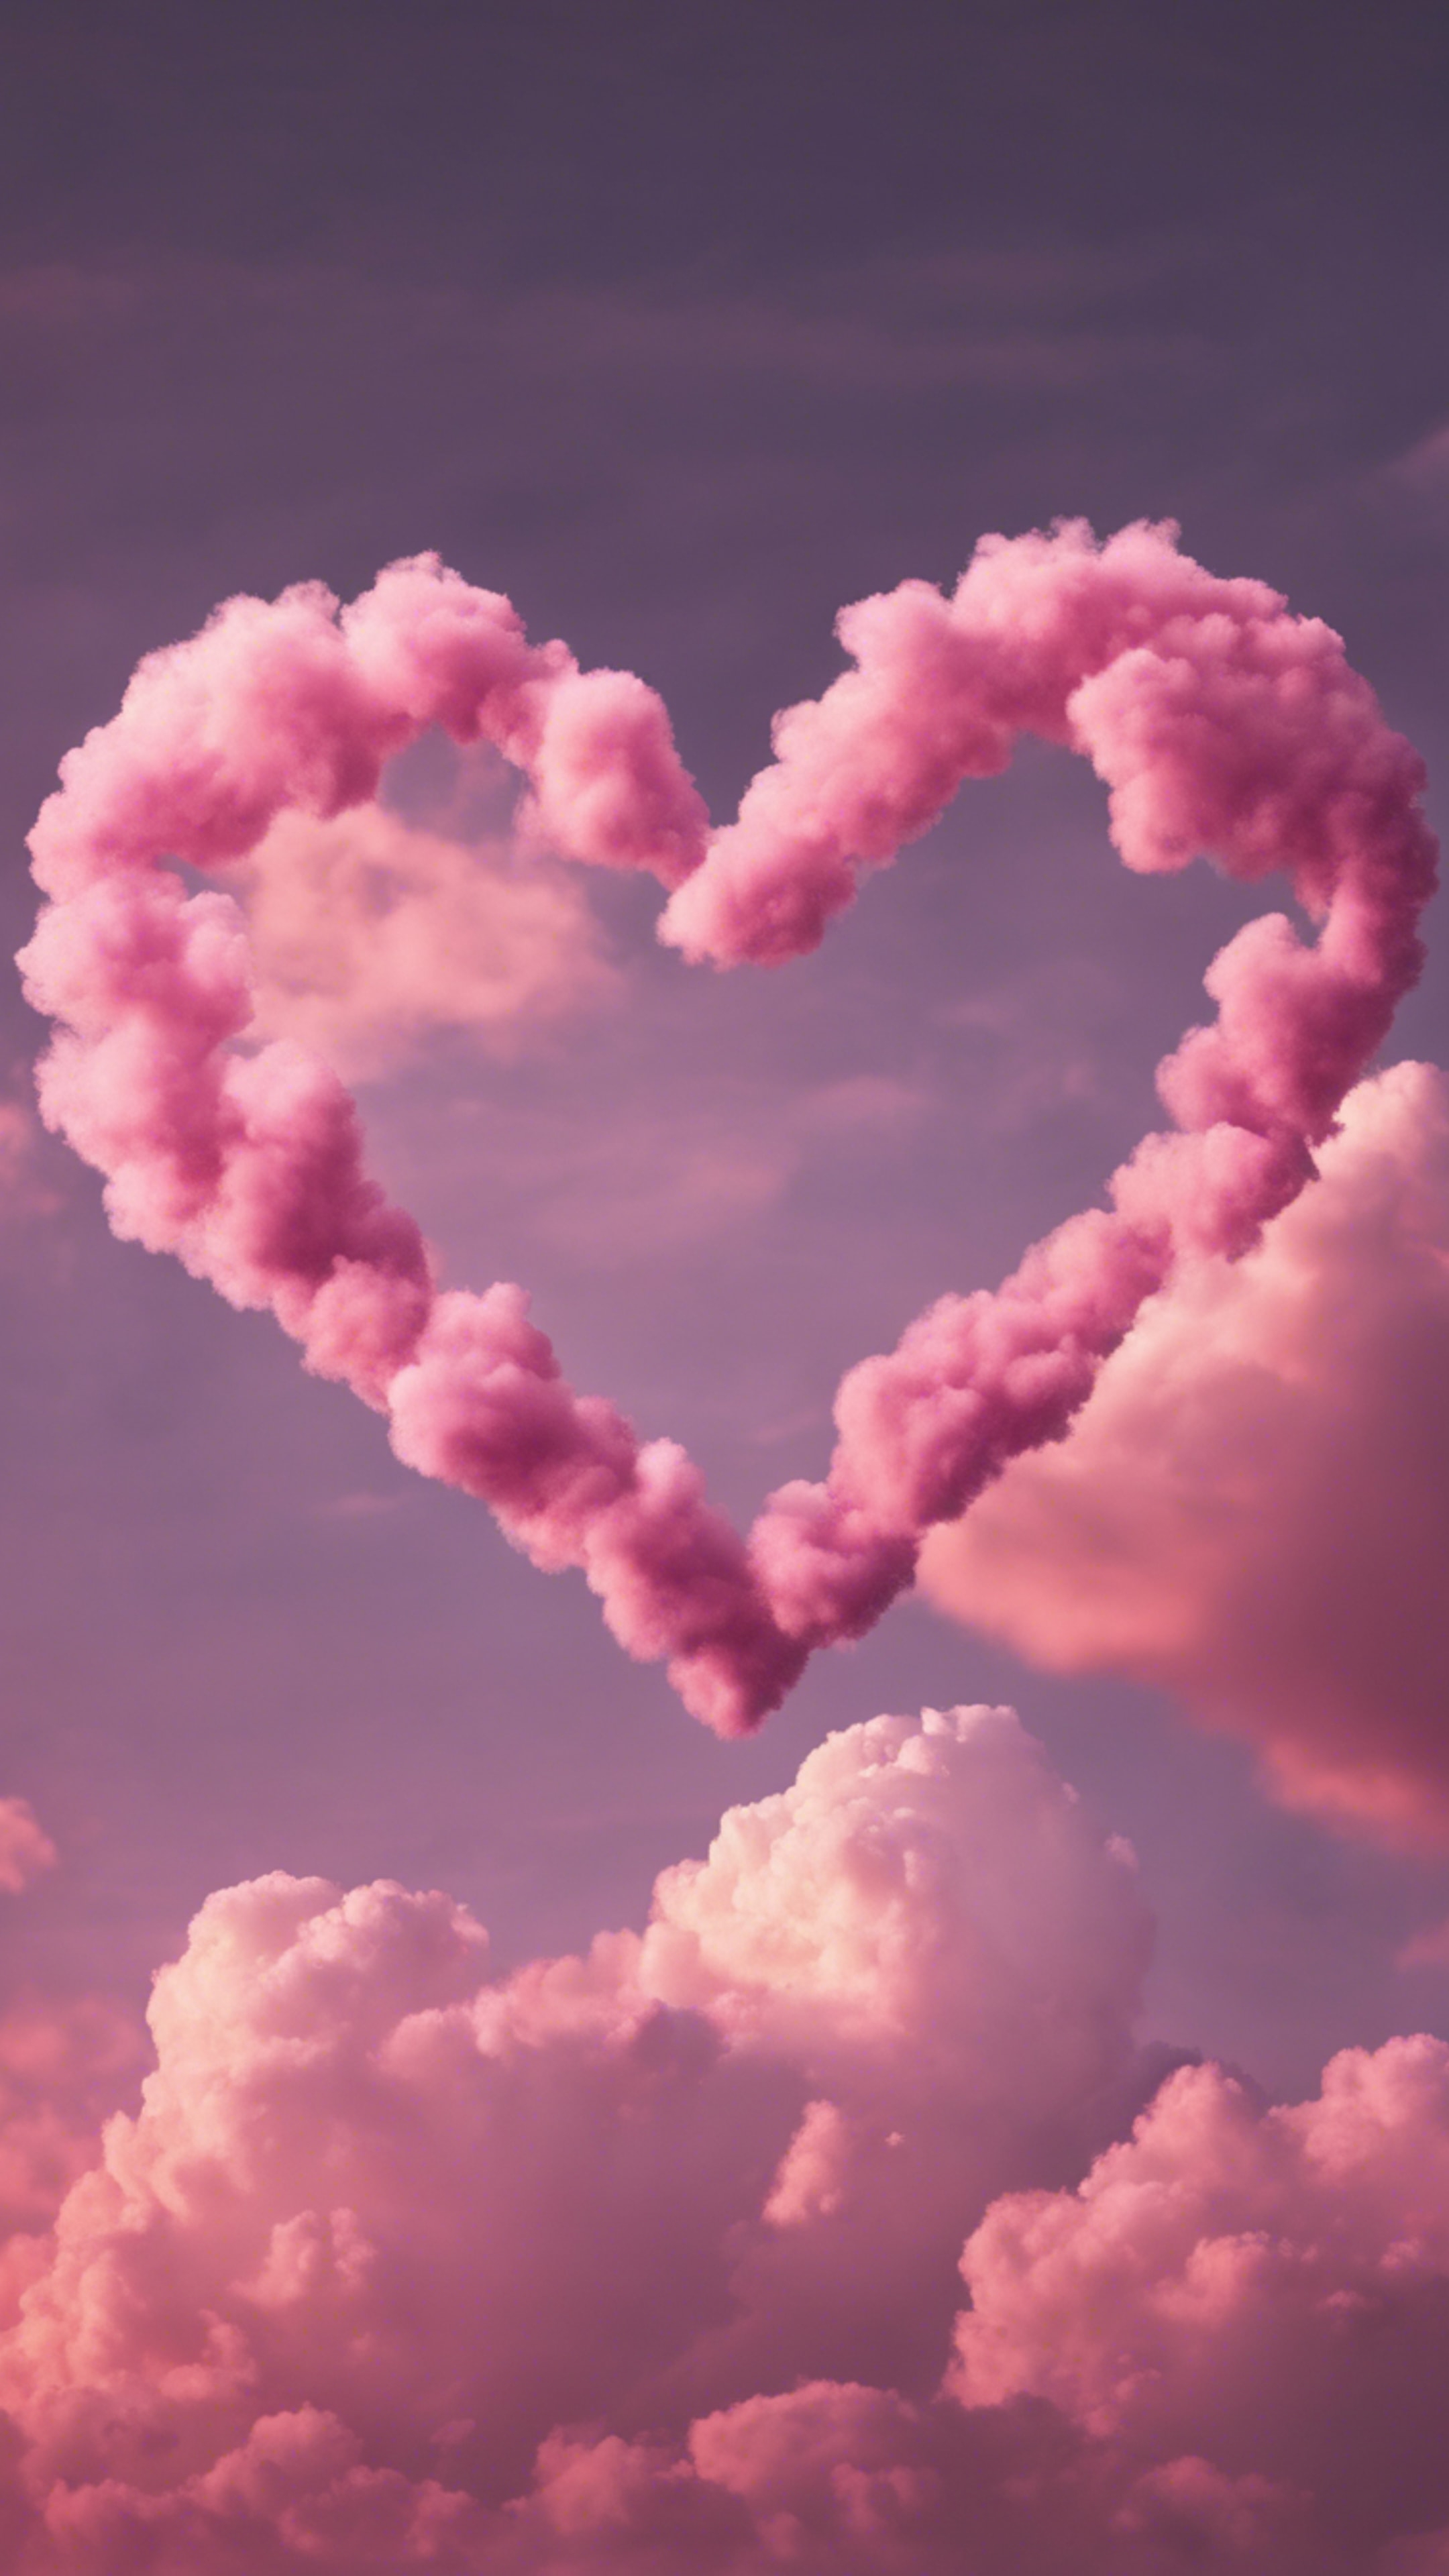 Pink heart-shaped clouds floating in the twilight sky. duvar kağıdı[eb6690dc48484c9aa4c9]